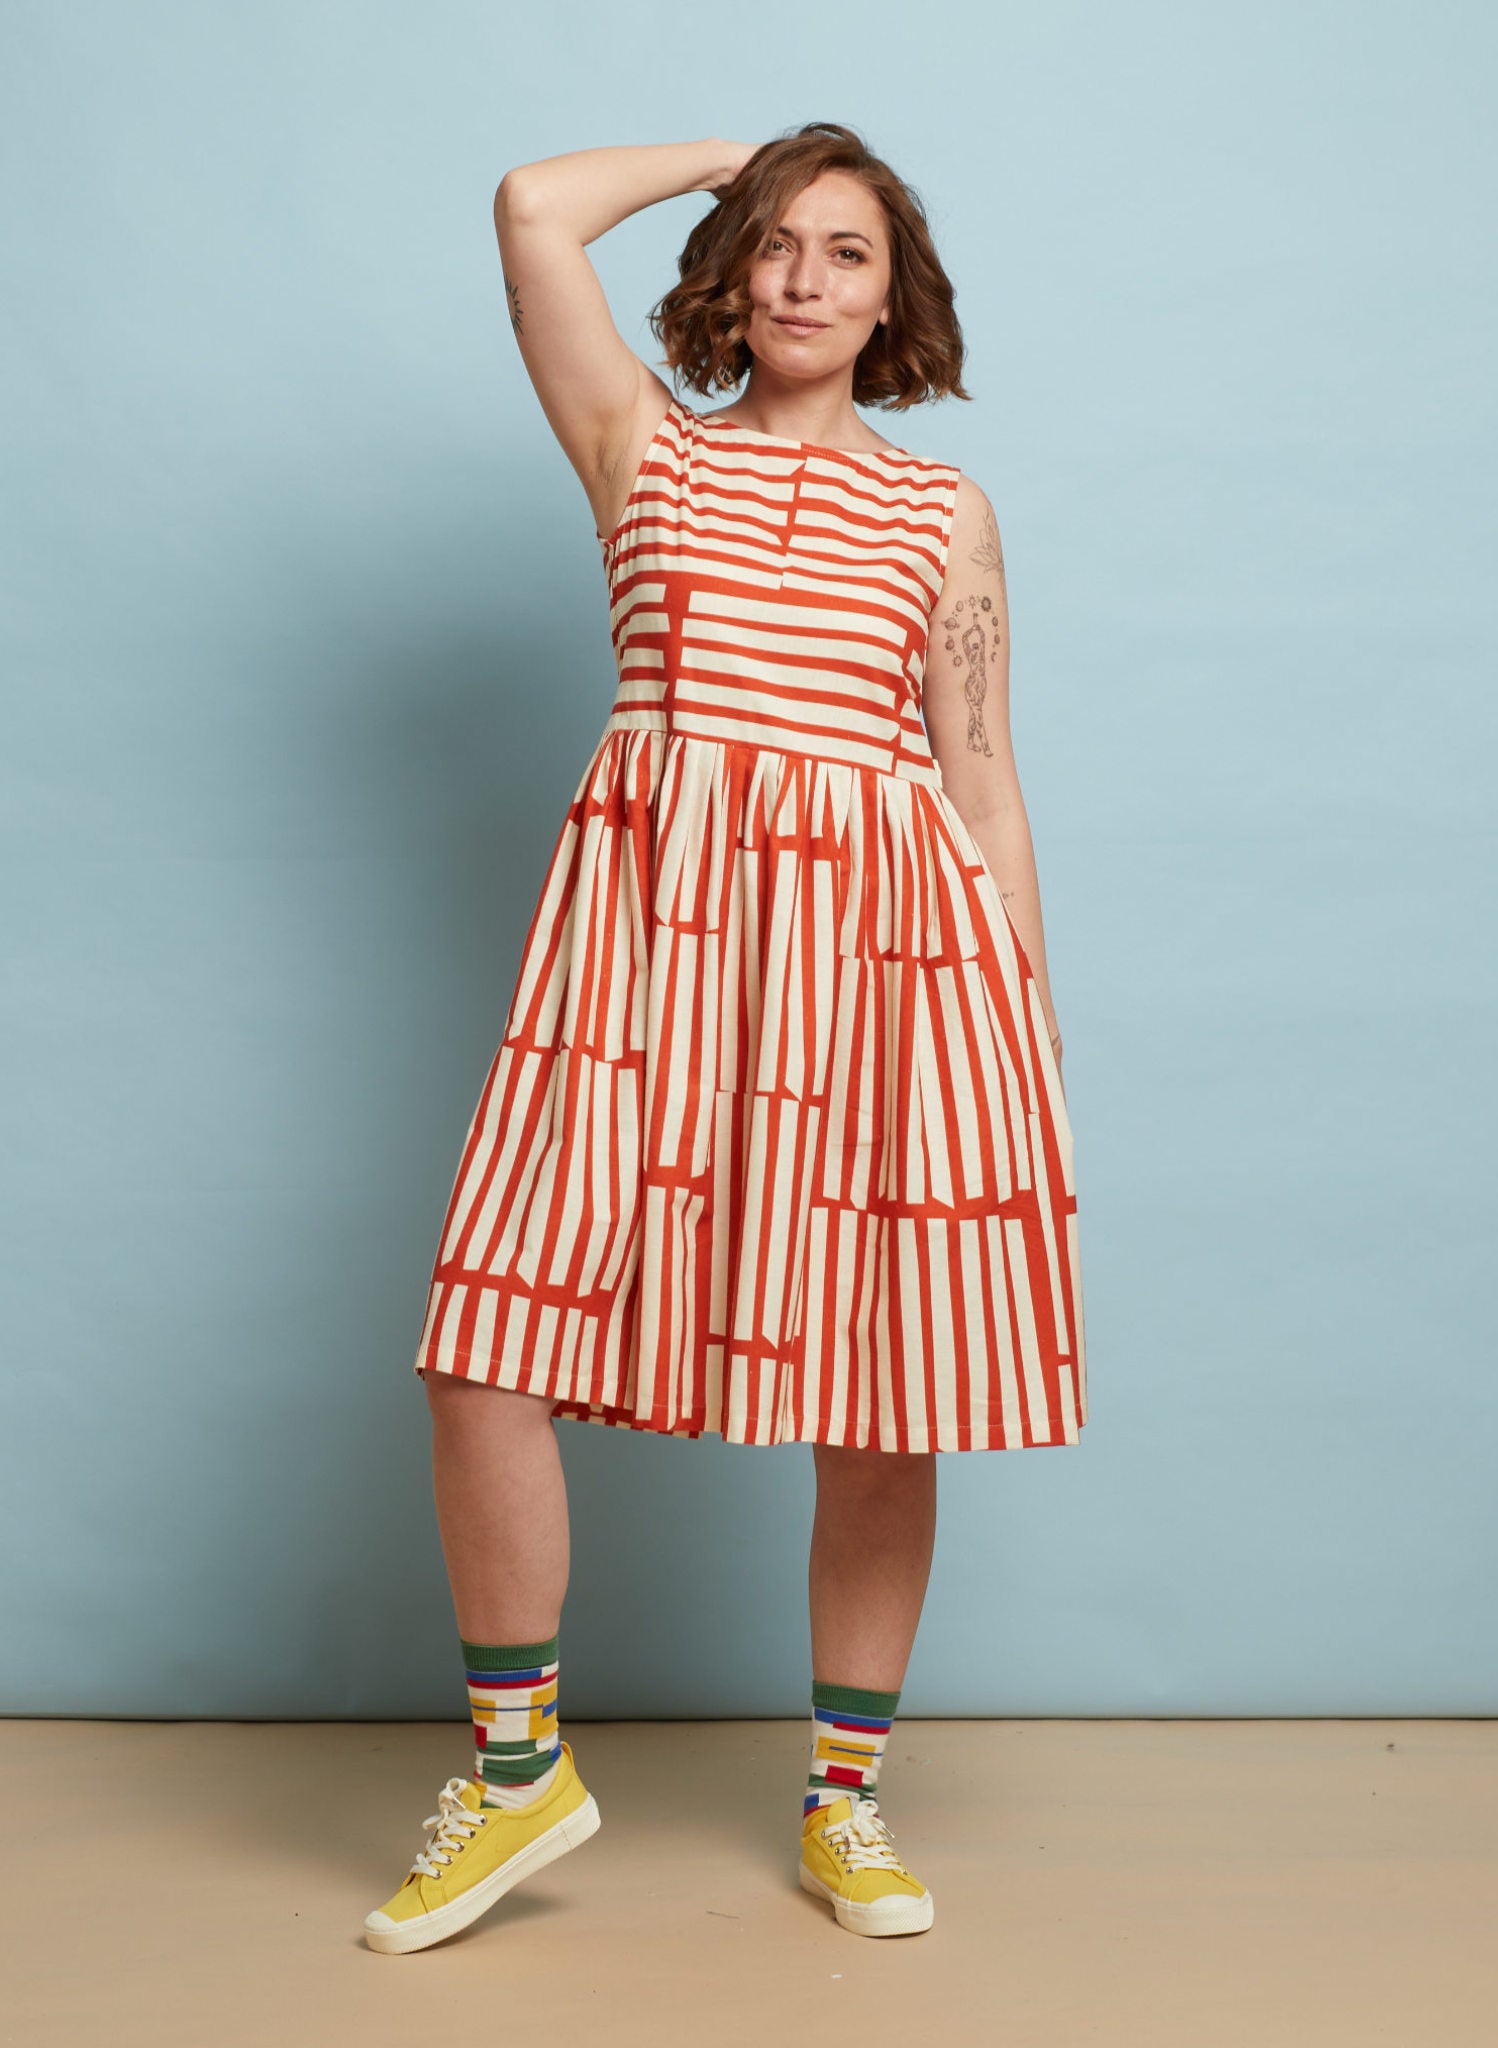 Mabel Dress - Red Box Stripe